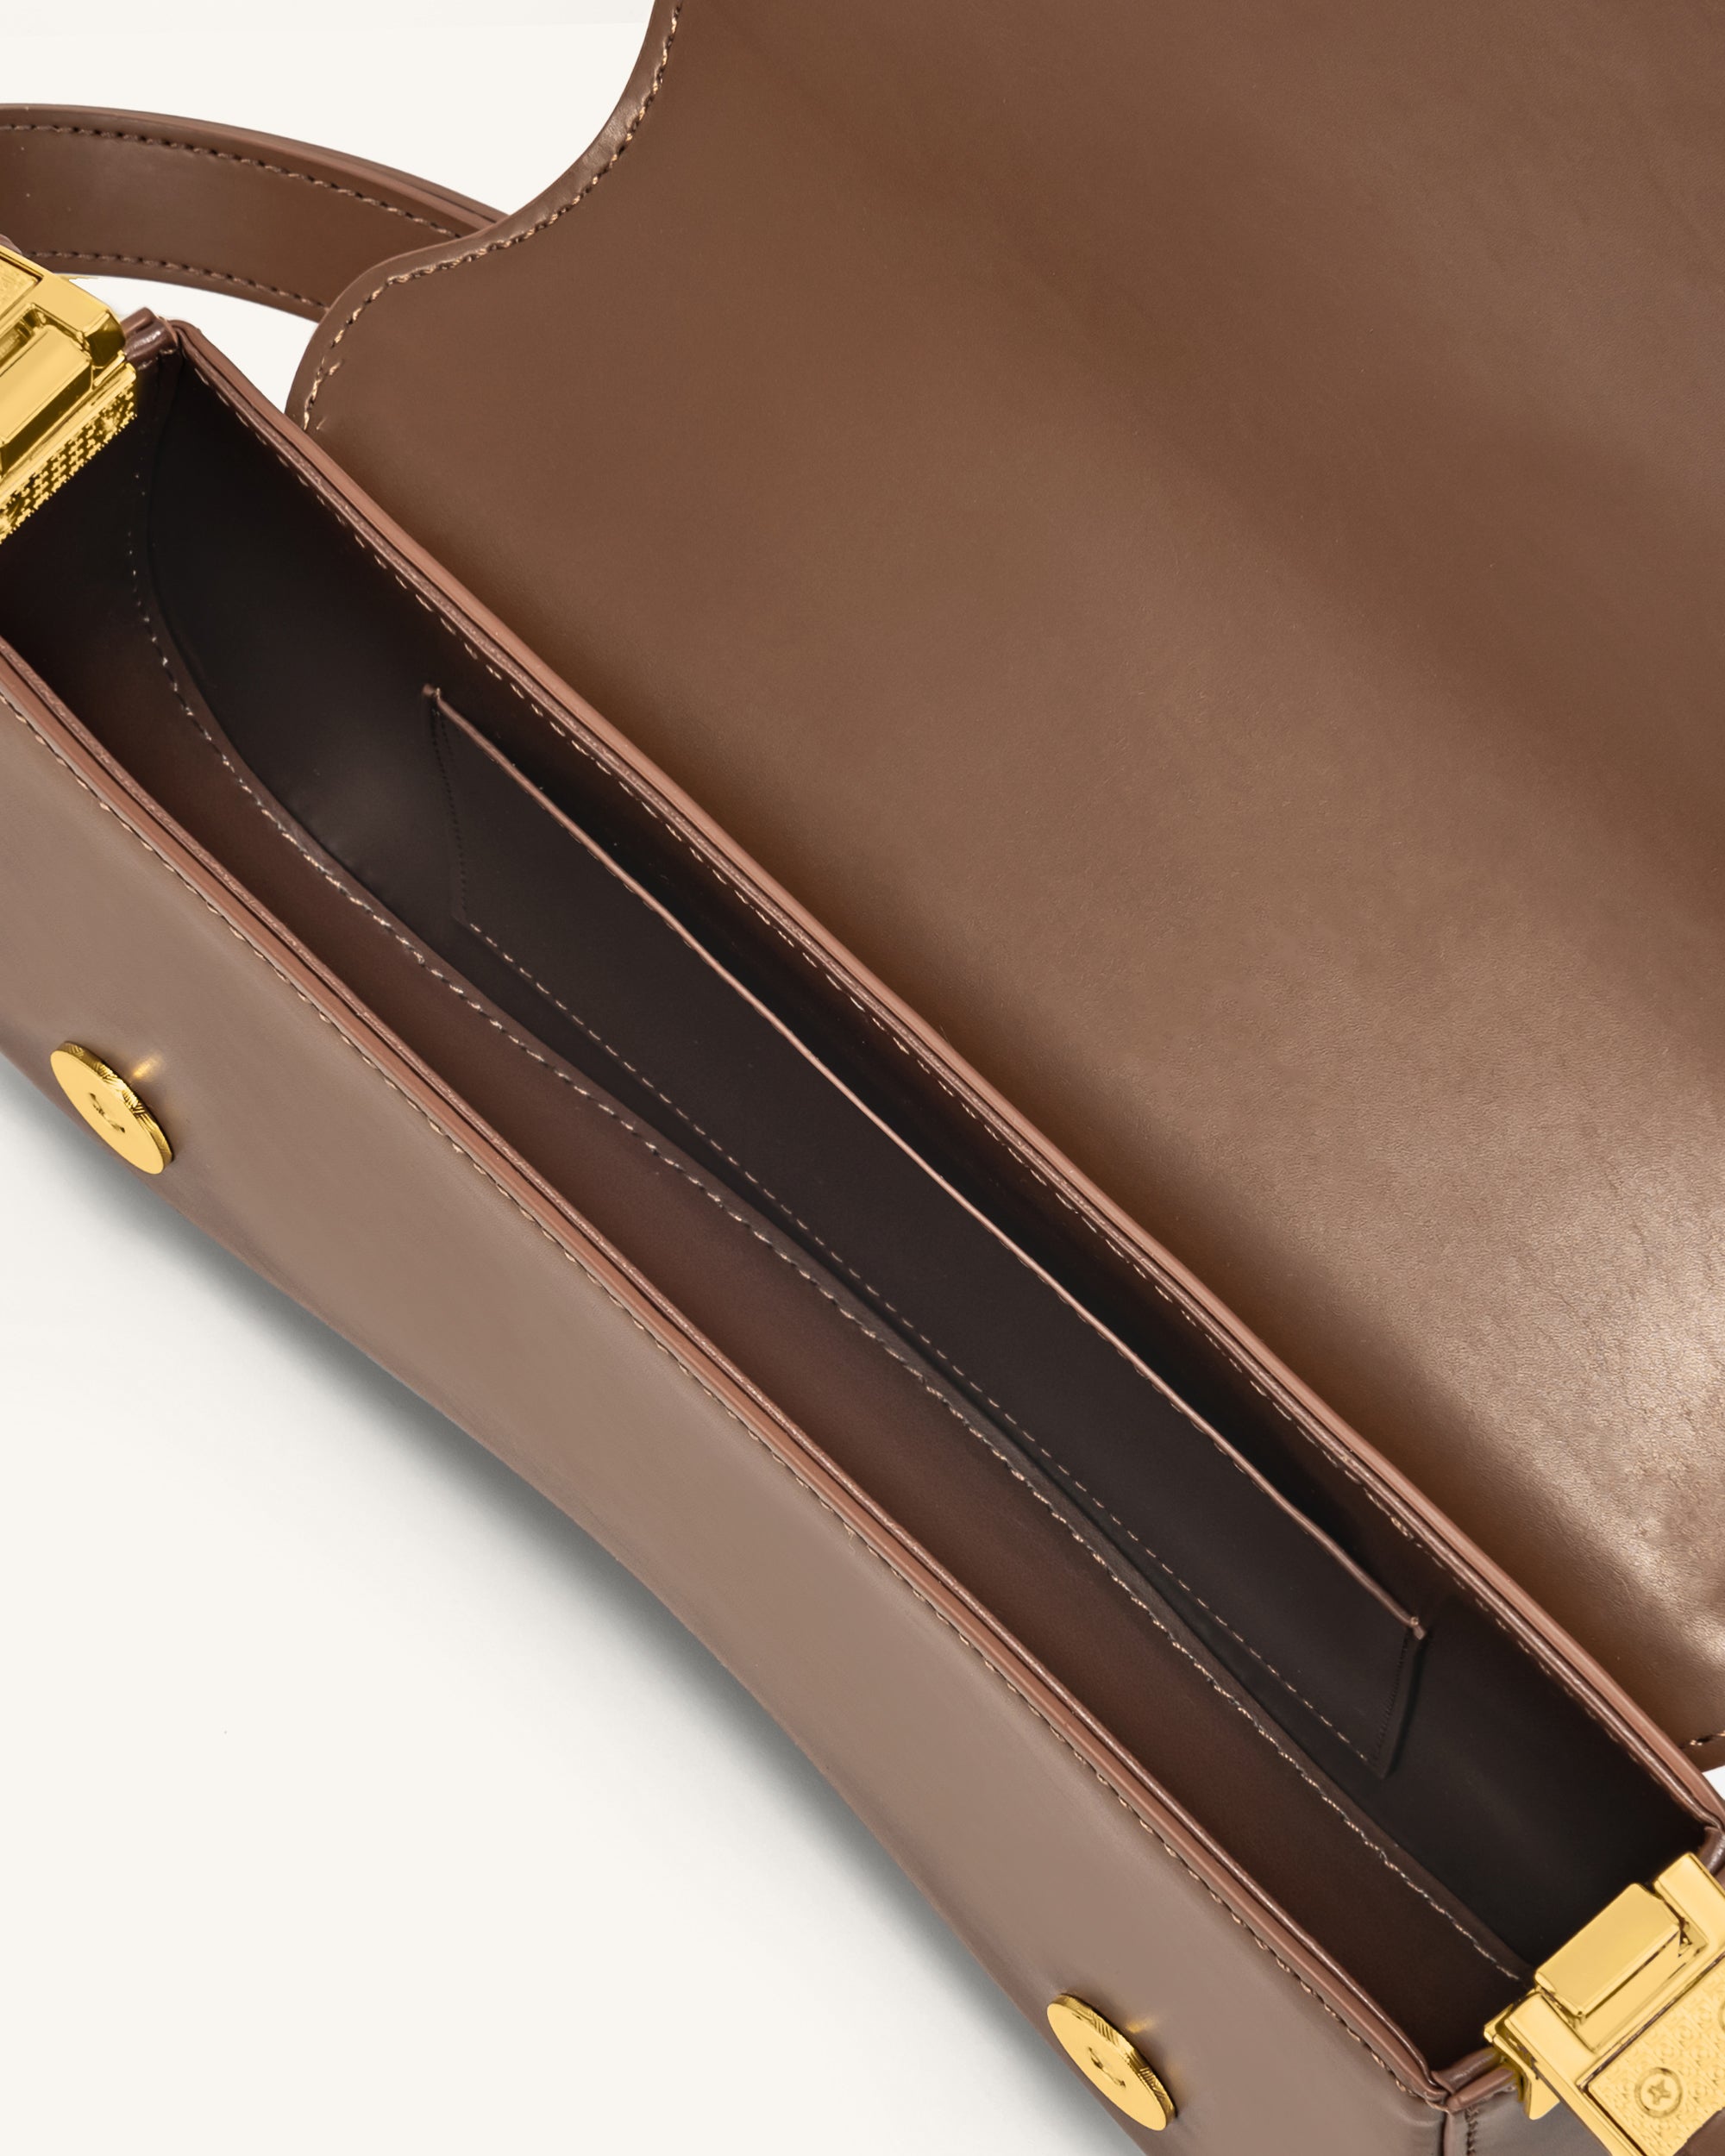 Vegan leather handbag JW PEI Brown in Vegan leather - 23140640